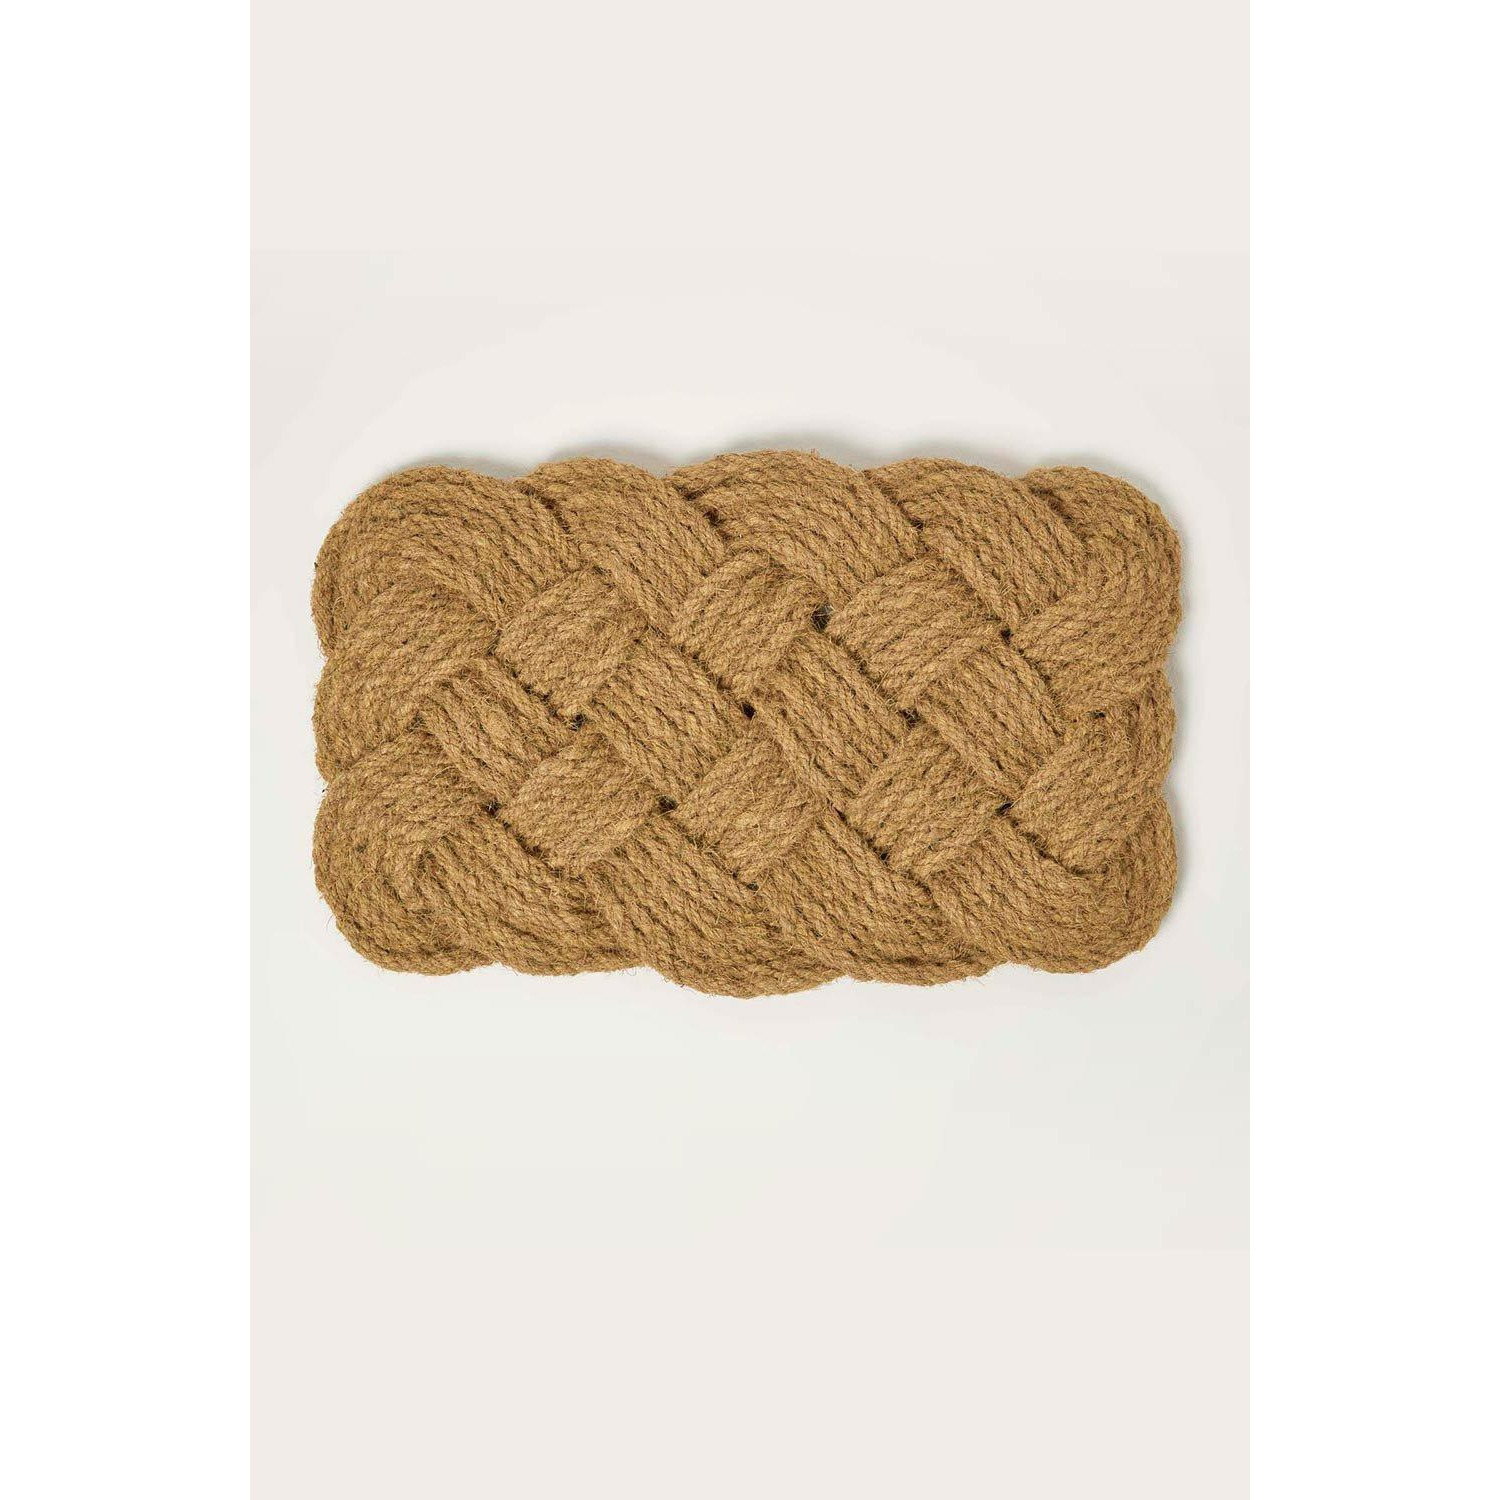 Knotted Coir Doormat 75 x 45 cm - image 1